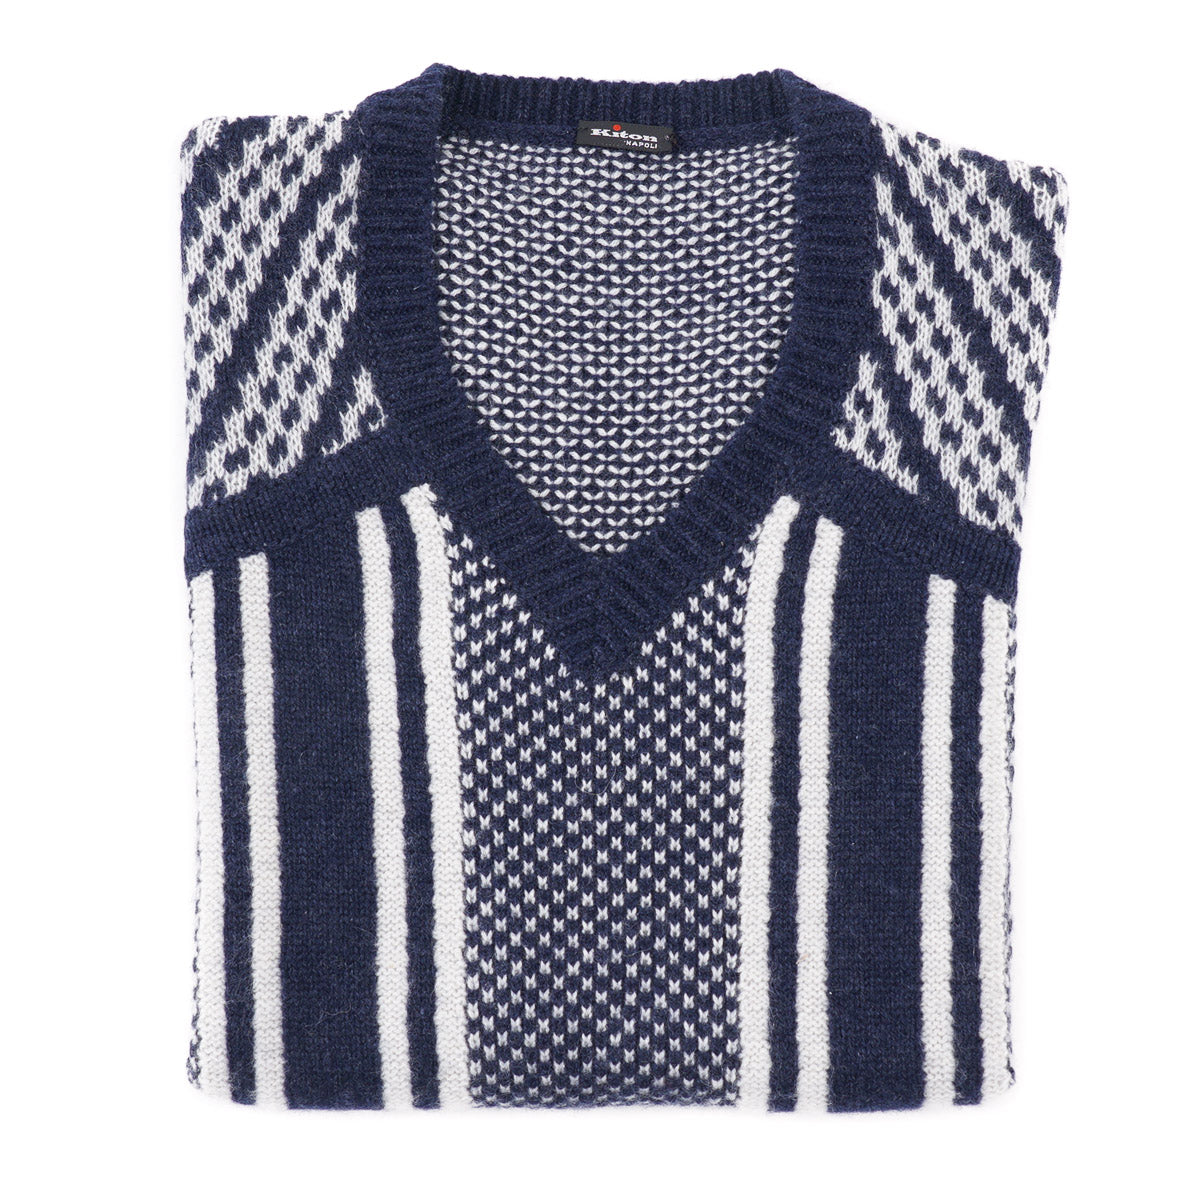 Kiton Patterned Cashmere Sweater Vest - Top Shelf Apparel